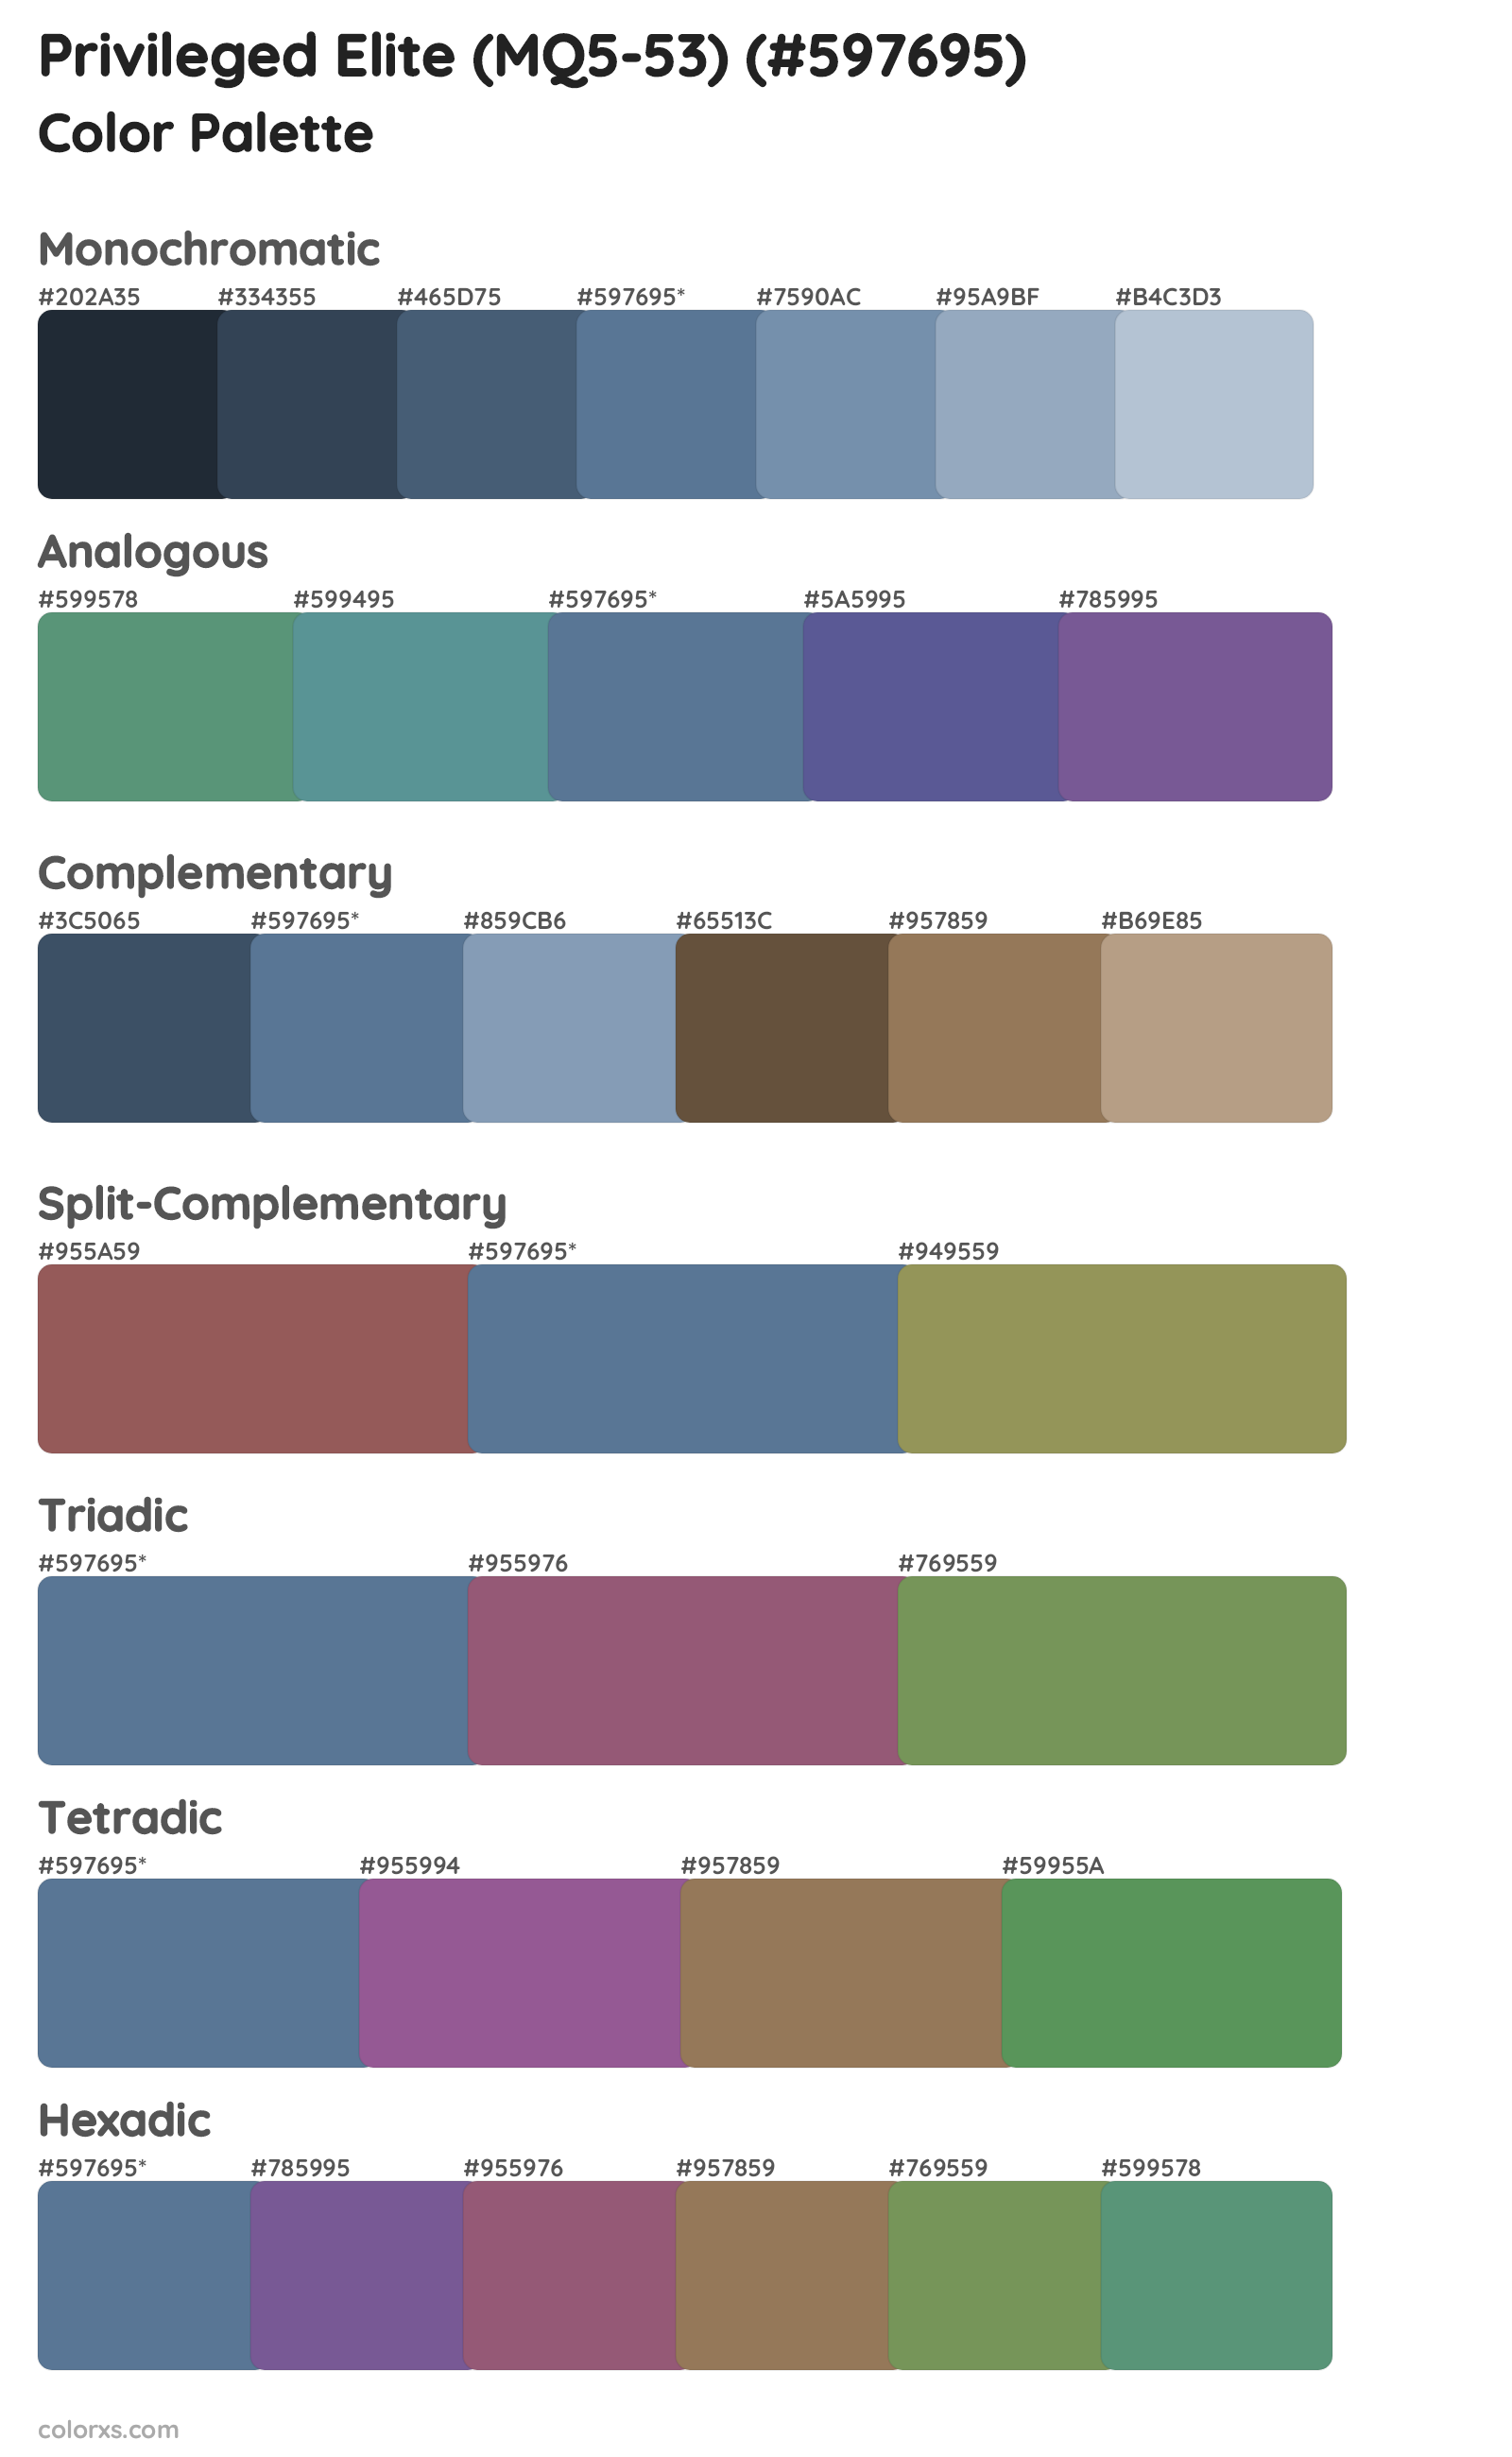 Privileged Elite (MQ5-53) Color Scheme Palettes